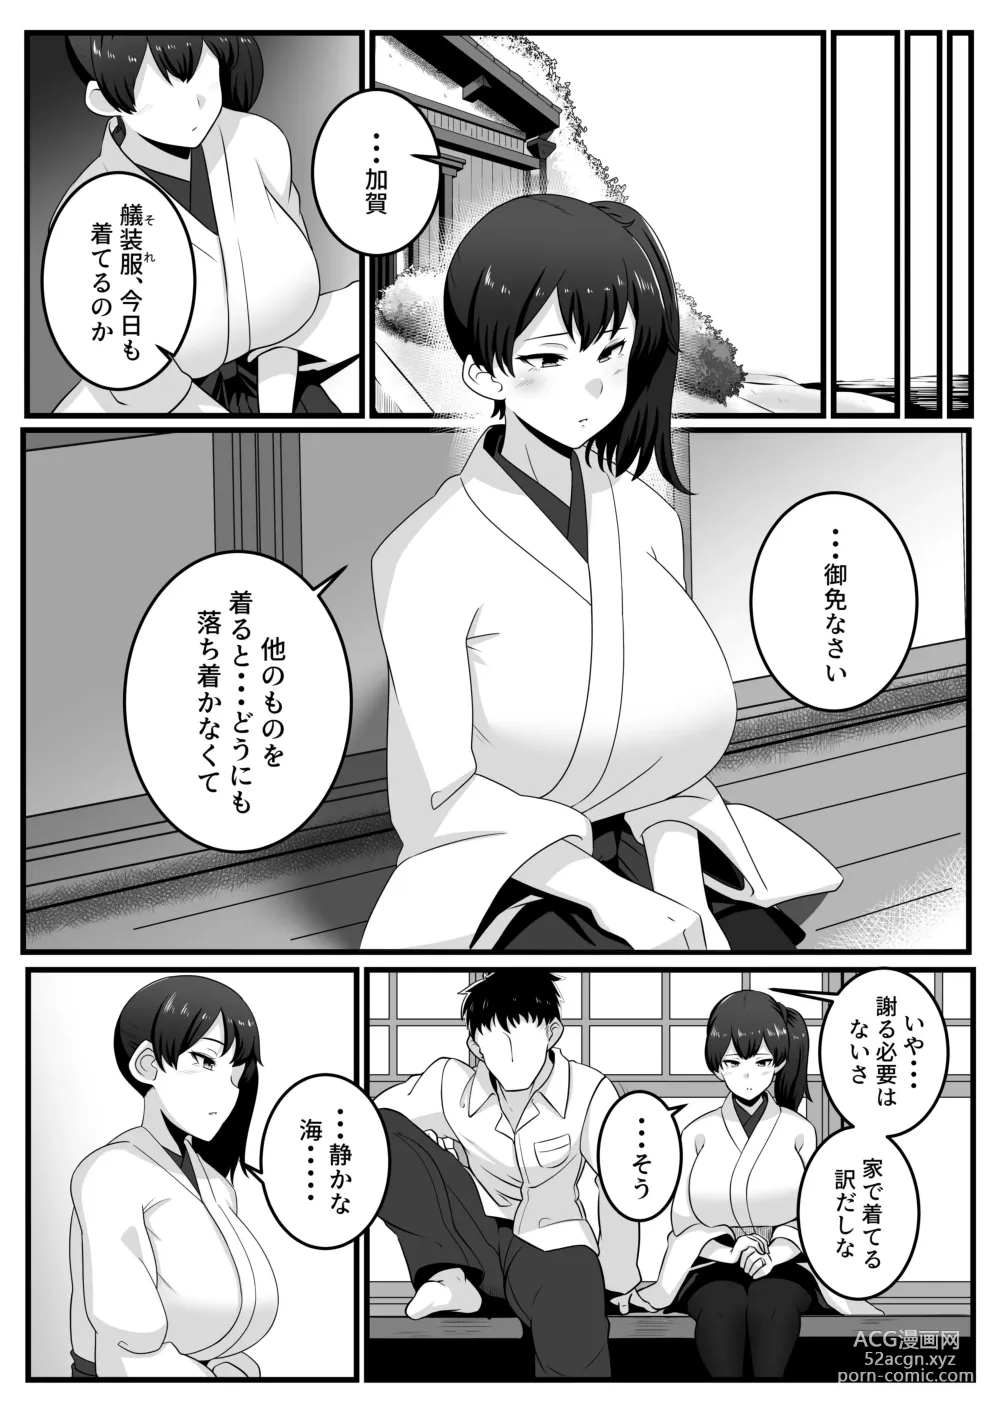 Page 3 of doujinshi Route Kaga